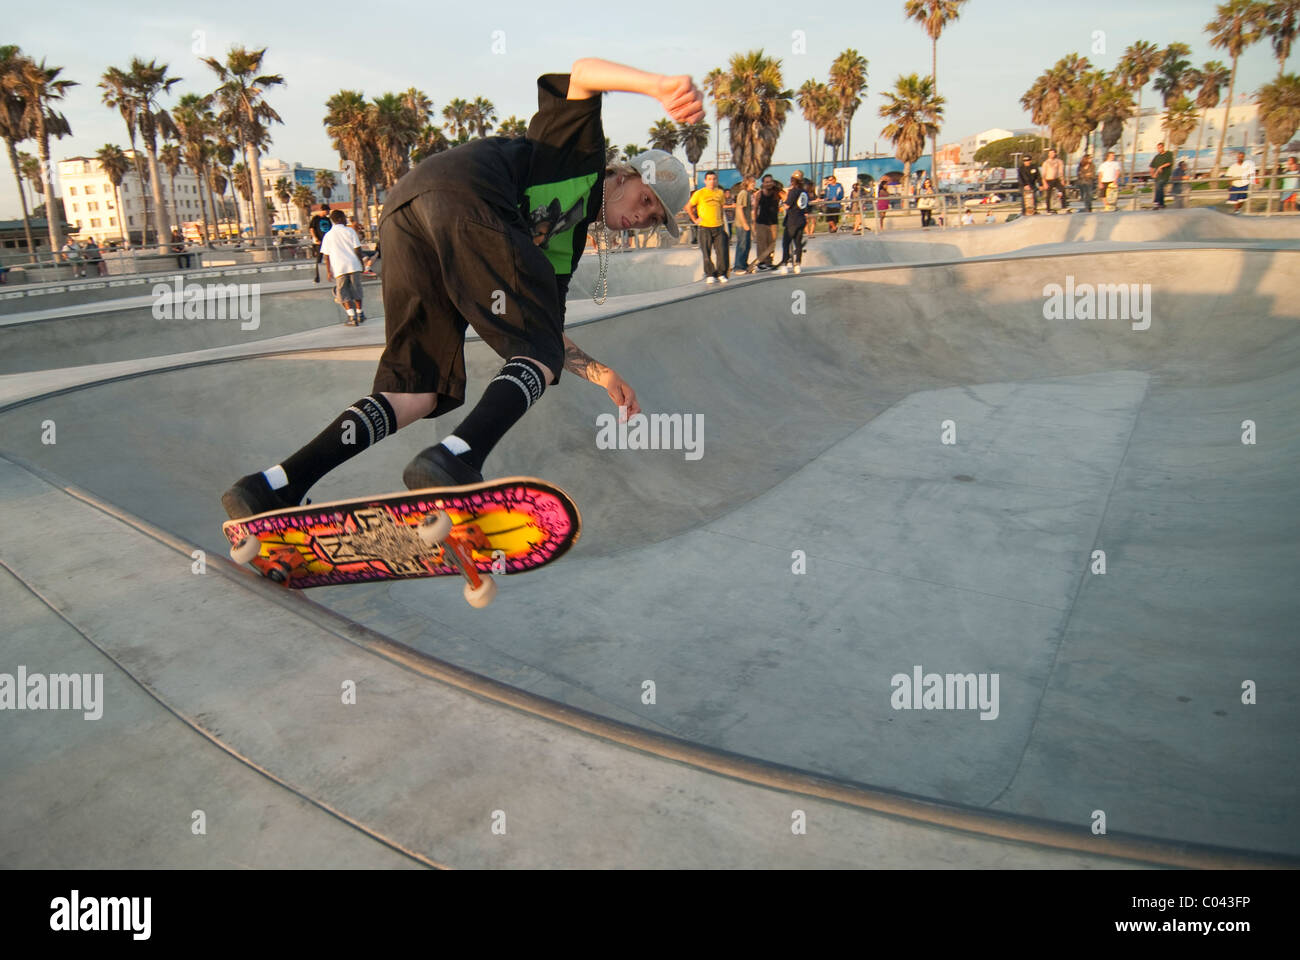 Skateboarder am berühmten Venice Beach, Kalifornien Stockfoto